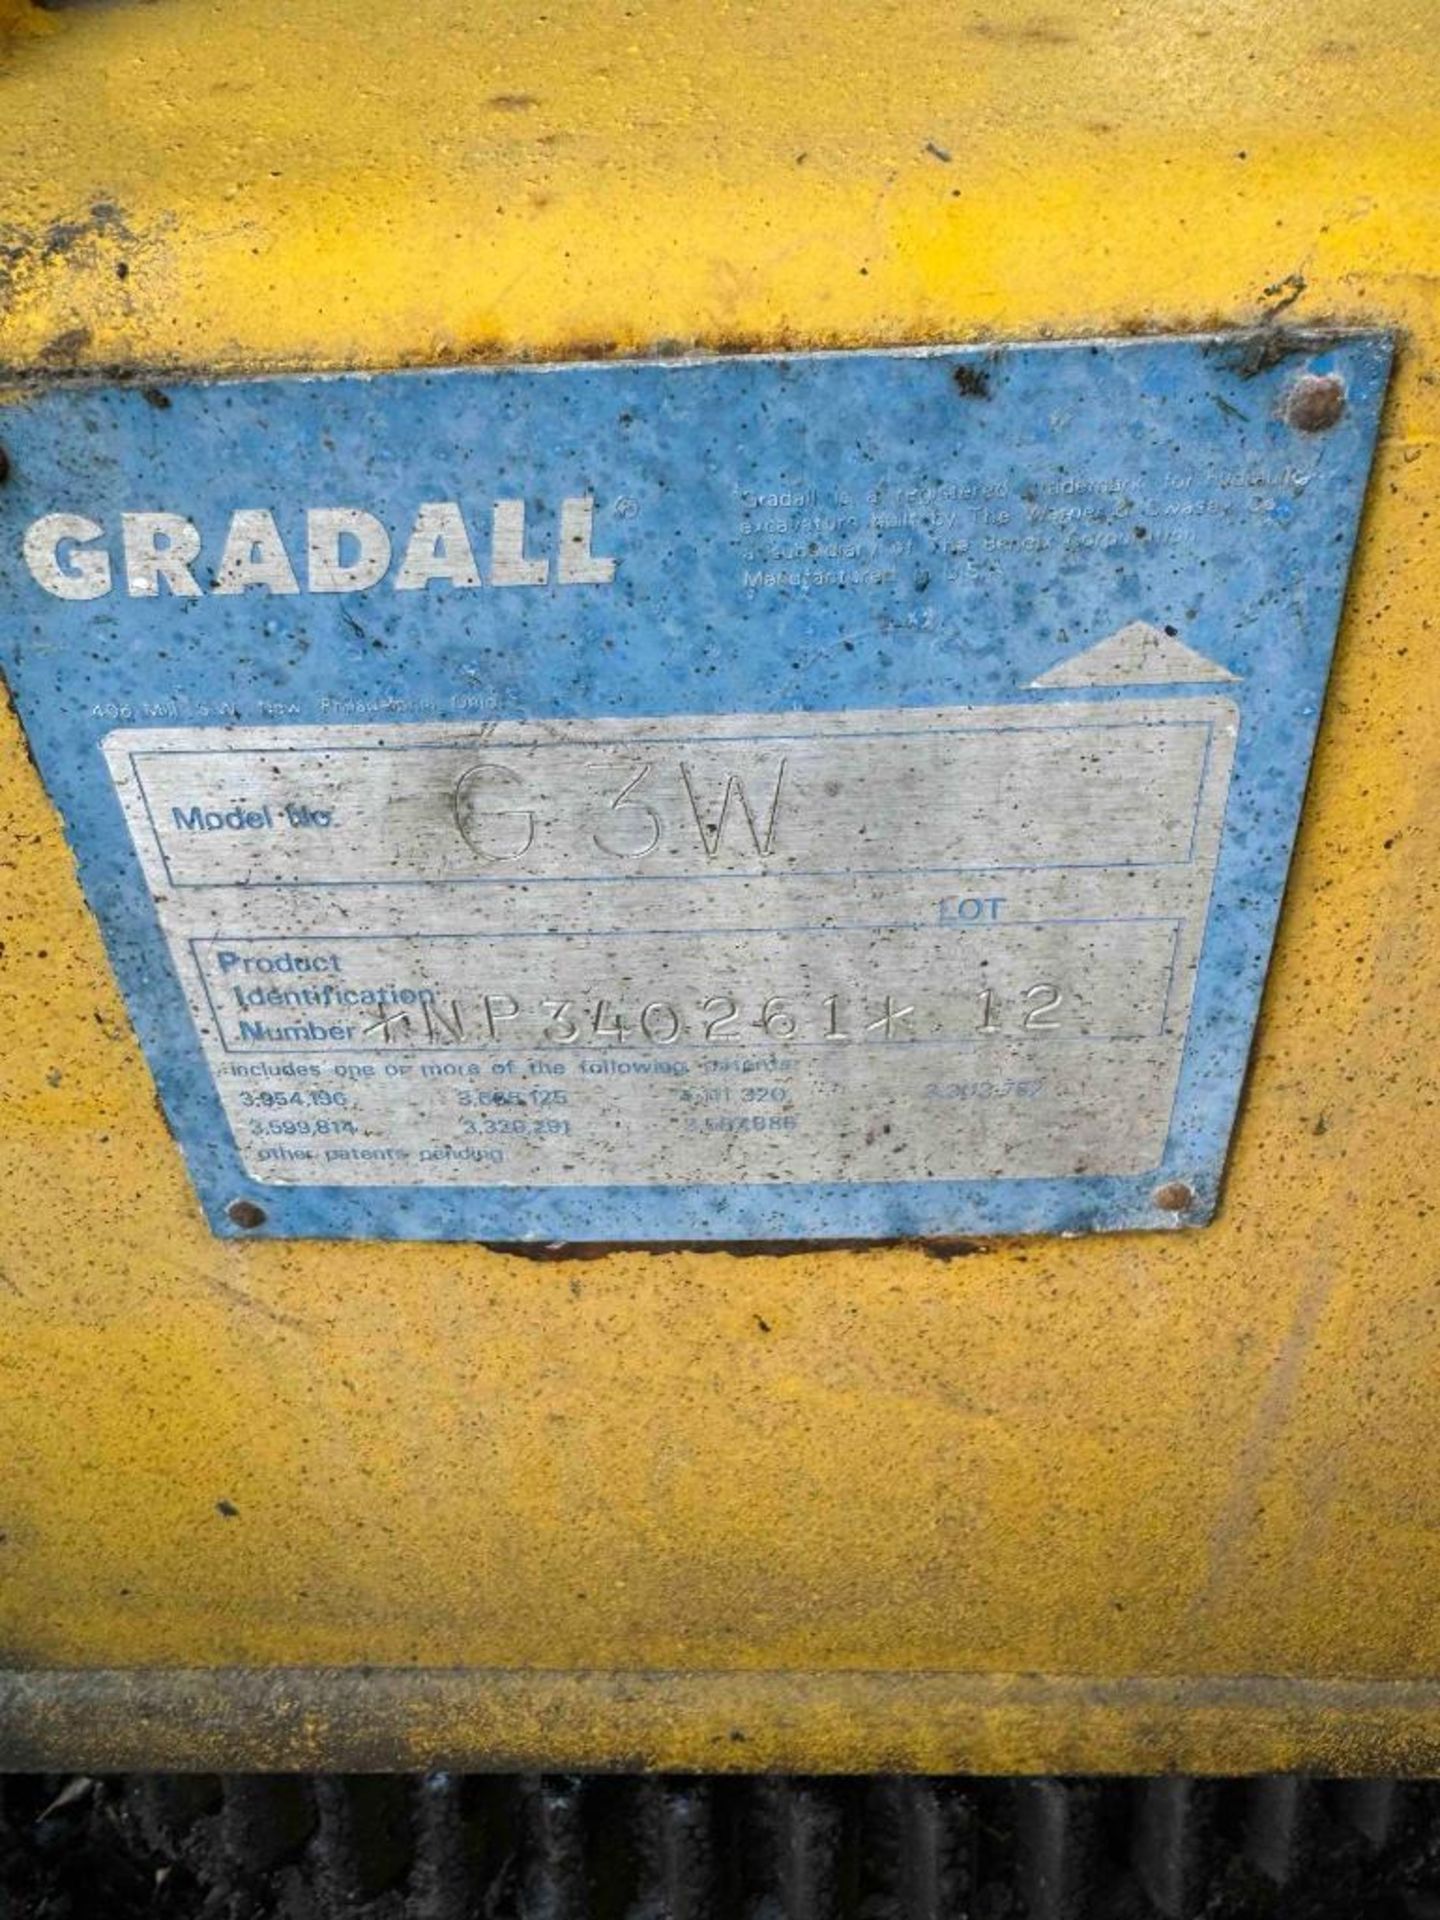 Gradall Model GW-464-3W Bucket Truck (located offsite-please read full description) - Image 14 of 15